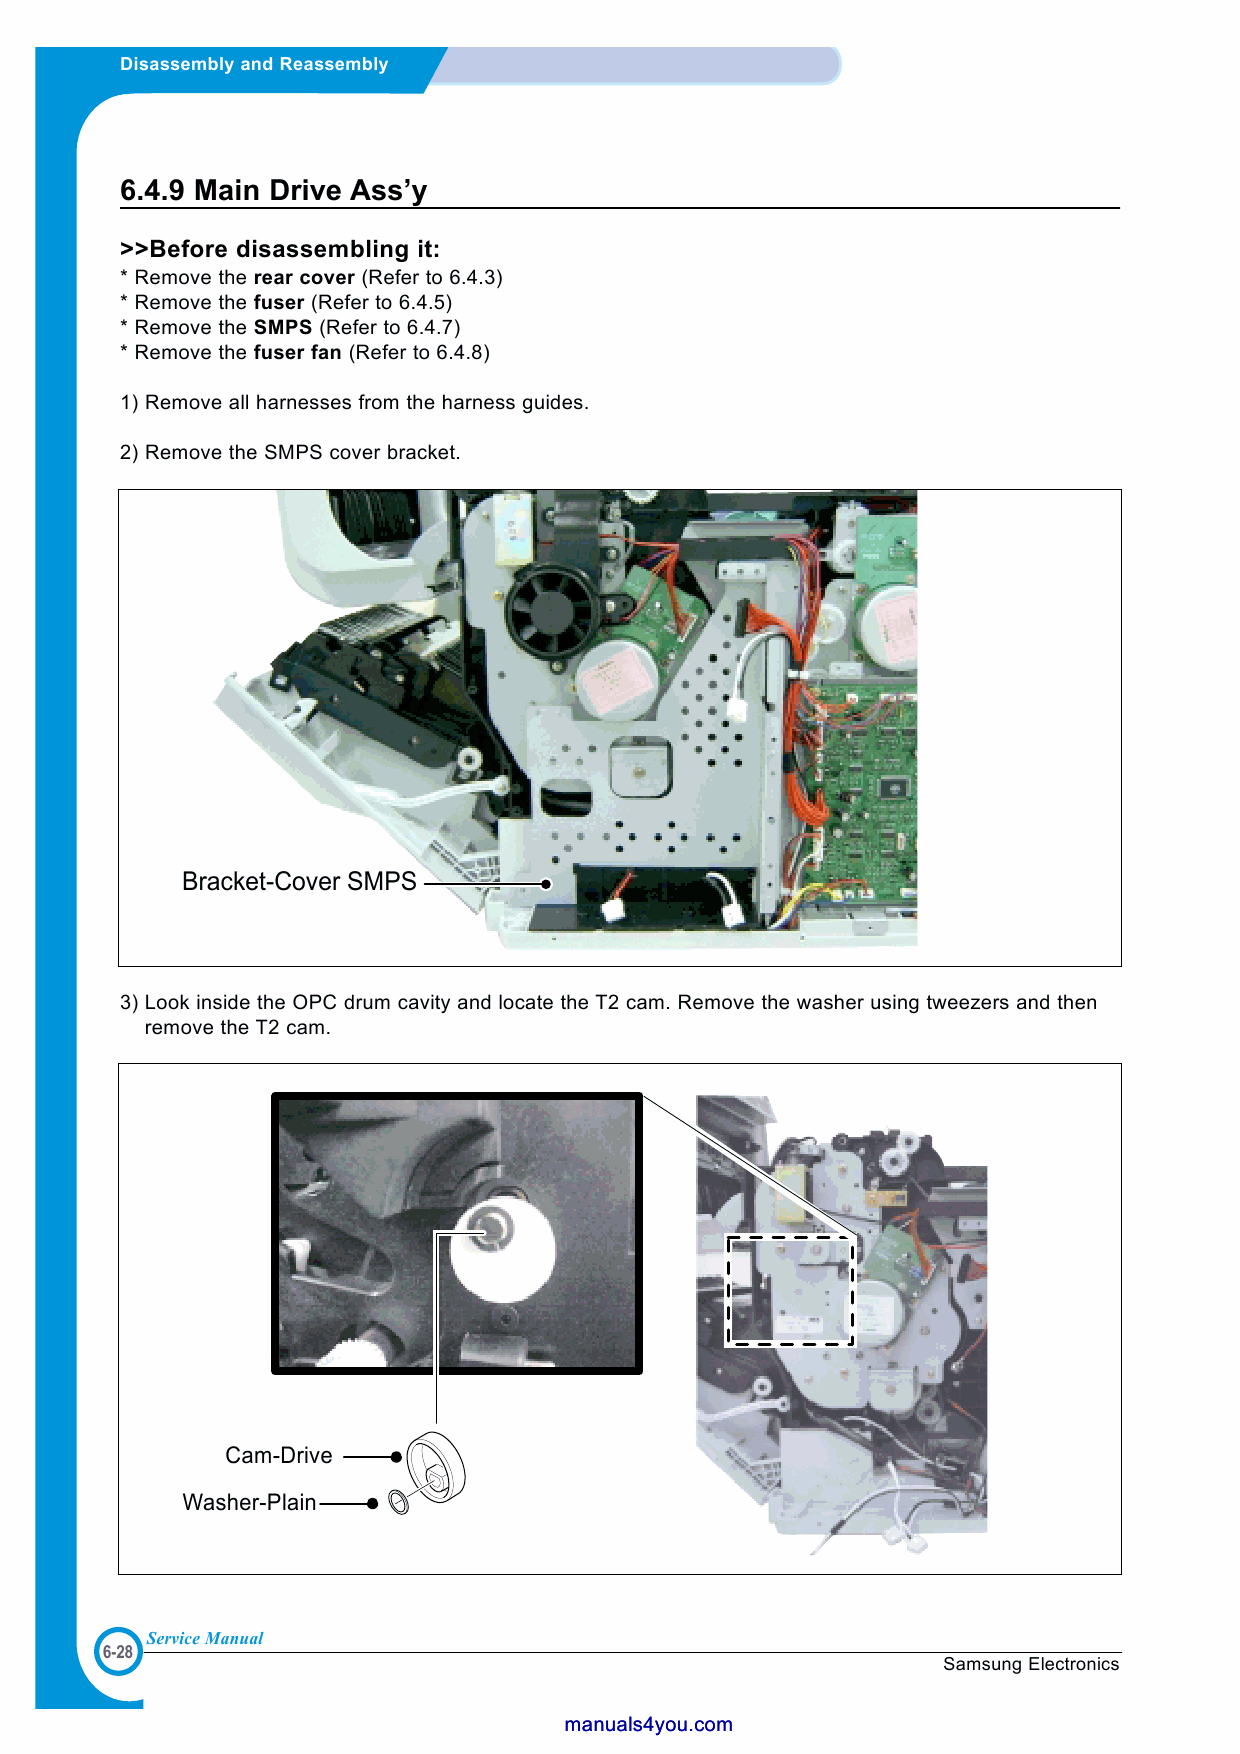 Samsung Color-Laser-Printer CLP-550 550N Parts and Service Manual-3